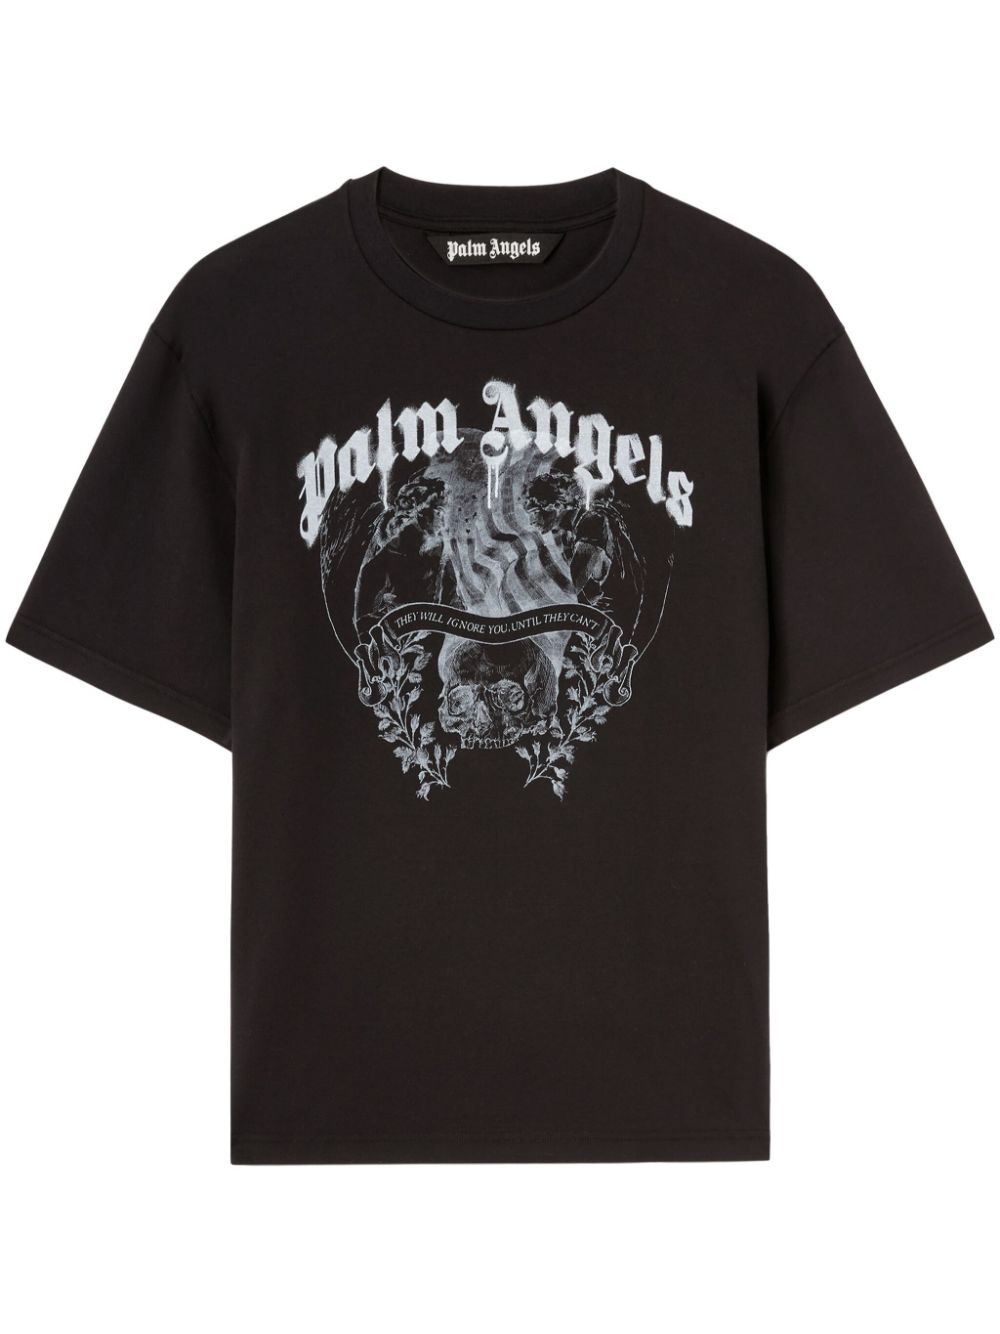 Palm Angels Statement Pencil cotton T-shirt - Black von Palm Angels